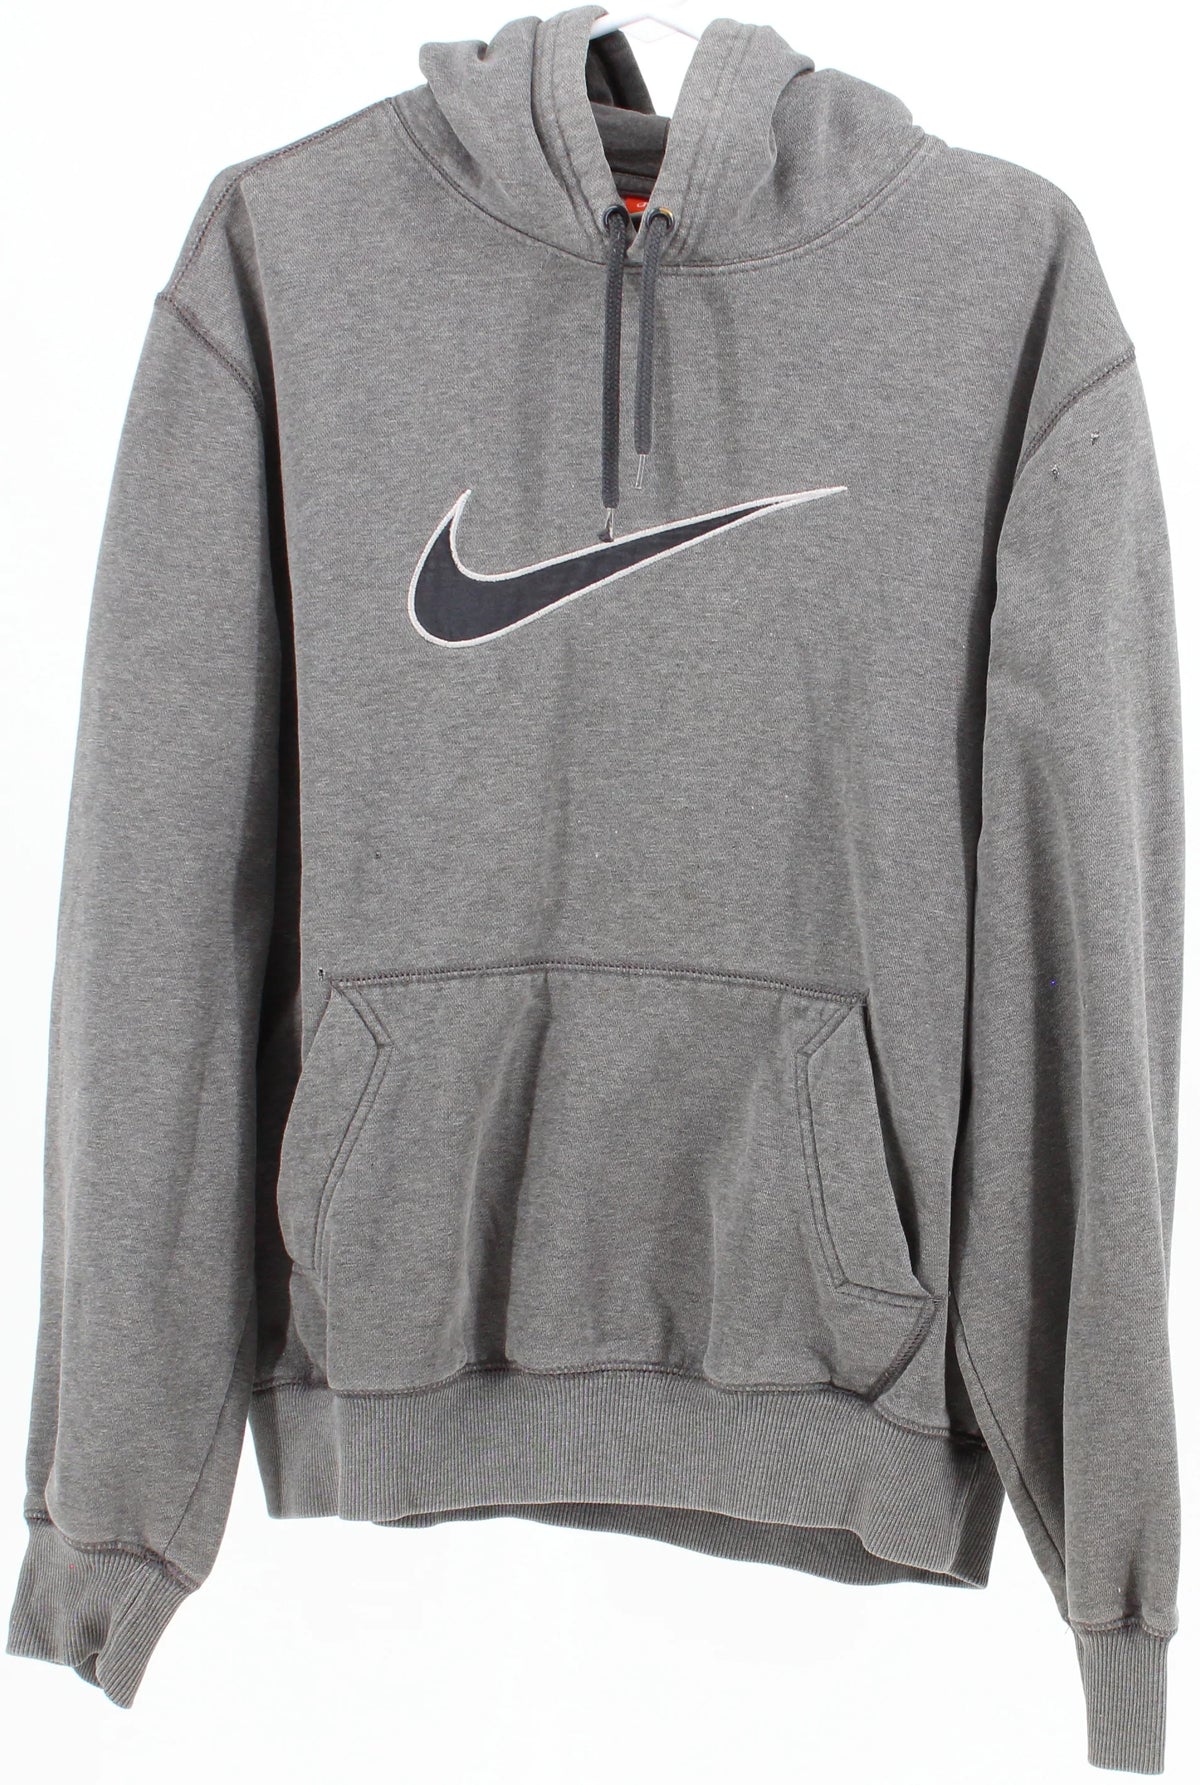 Nike The Athletic Dept. Grey Hooded Sweatshirt